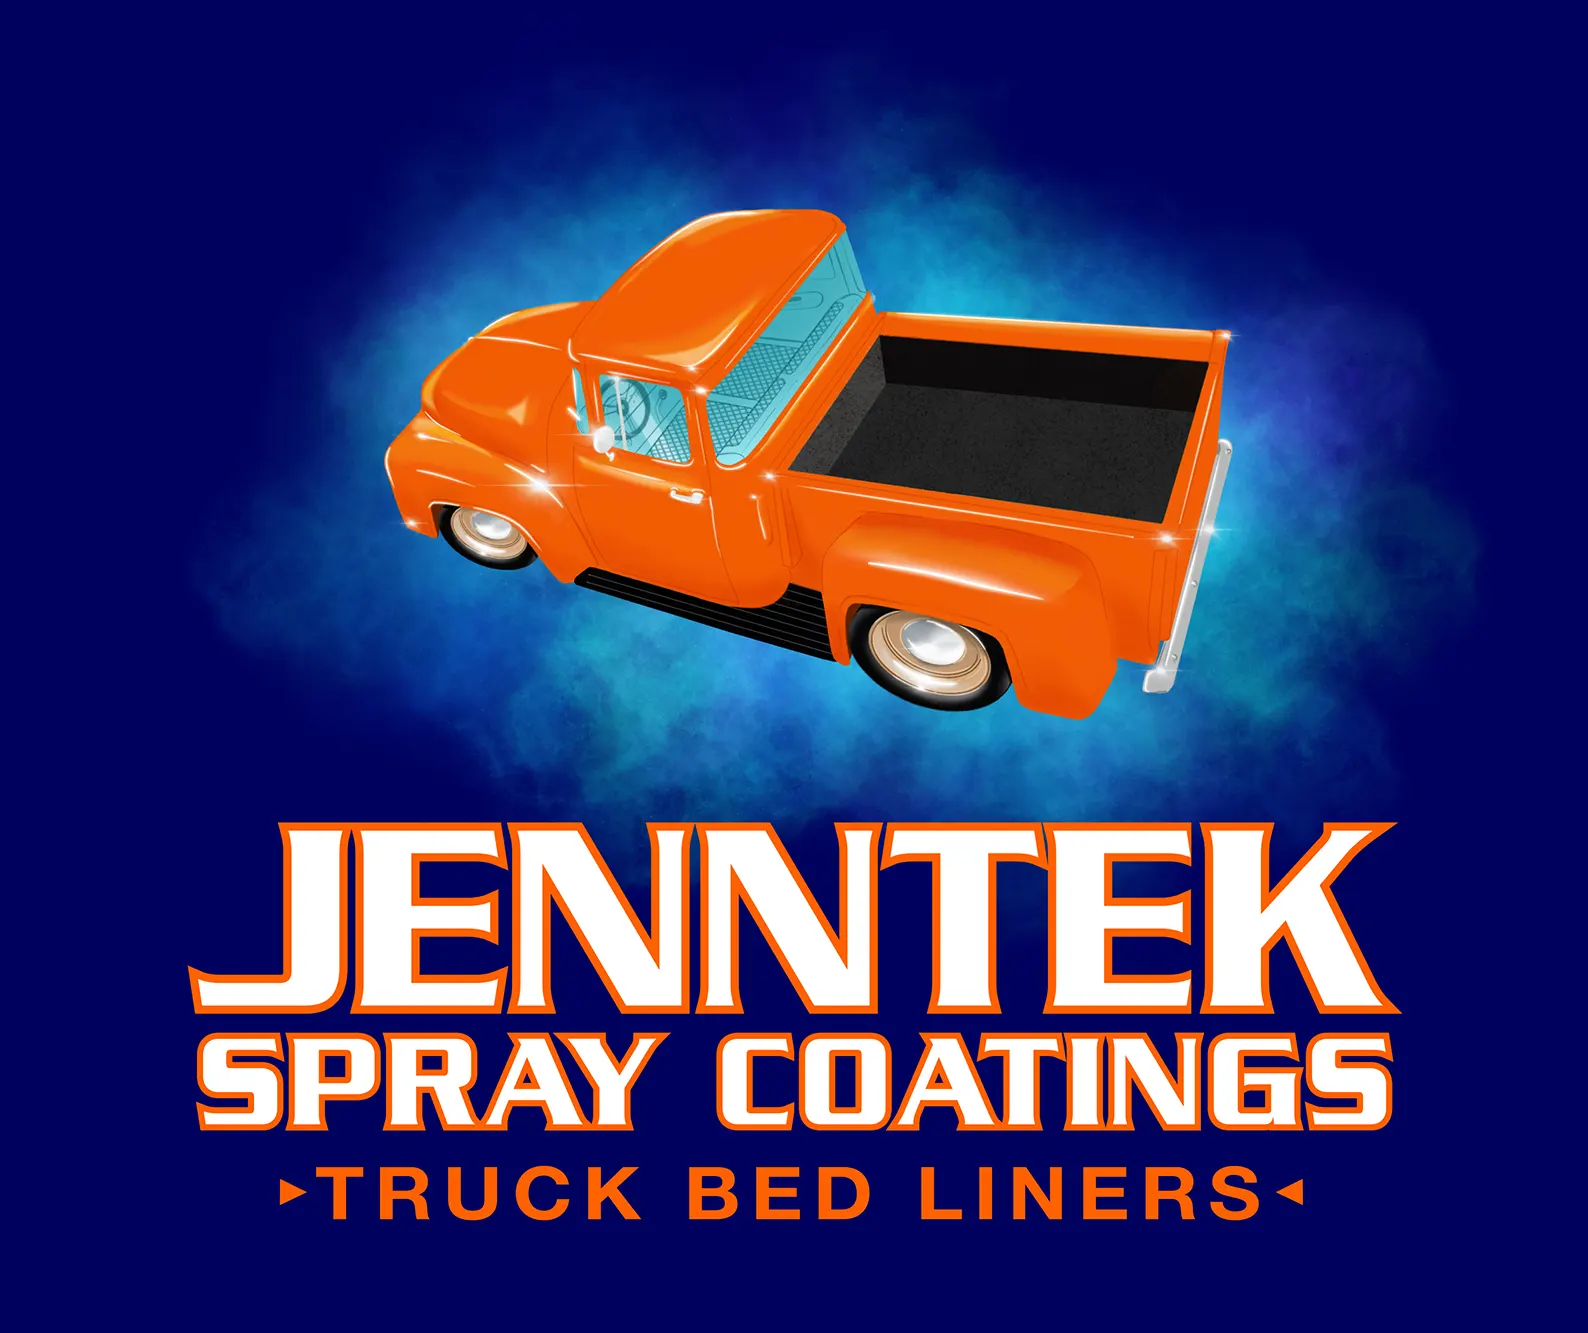 JennTek Spray Coatings truck bed liners.